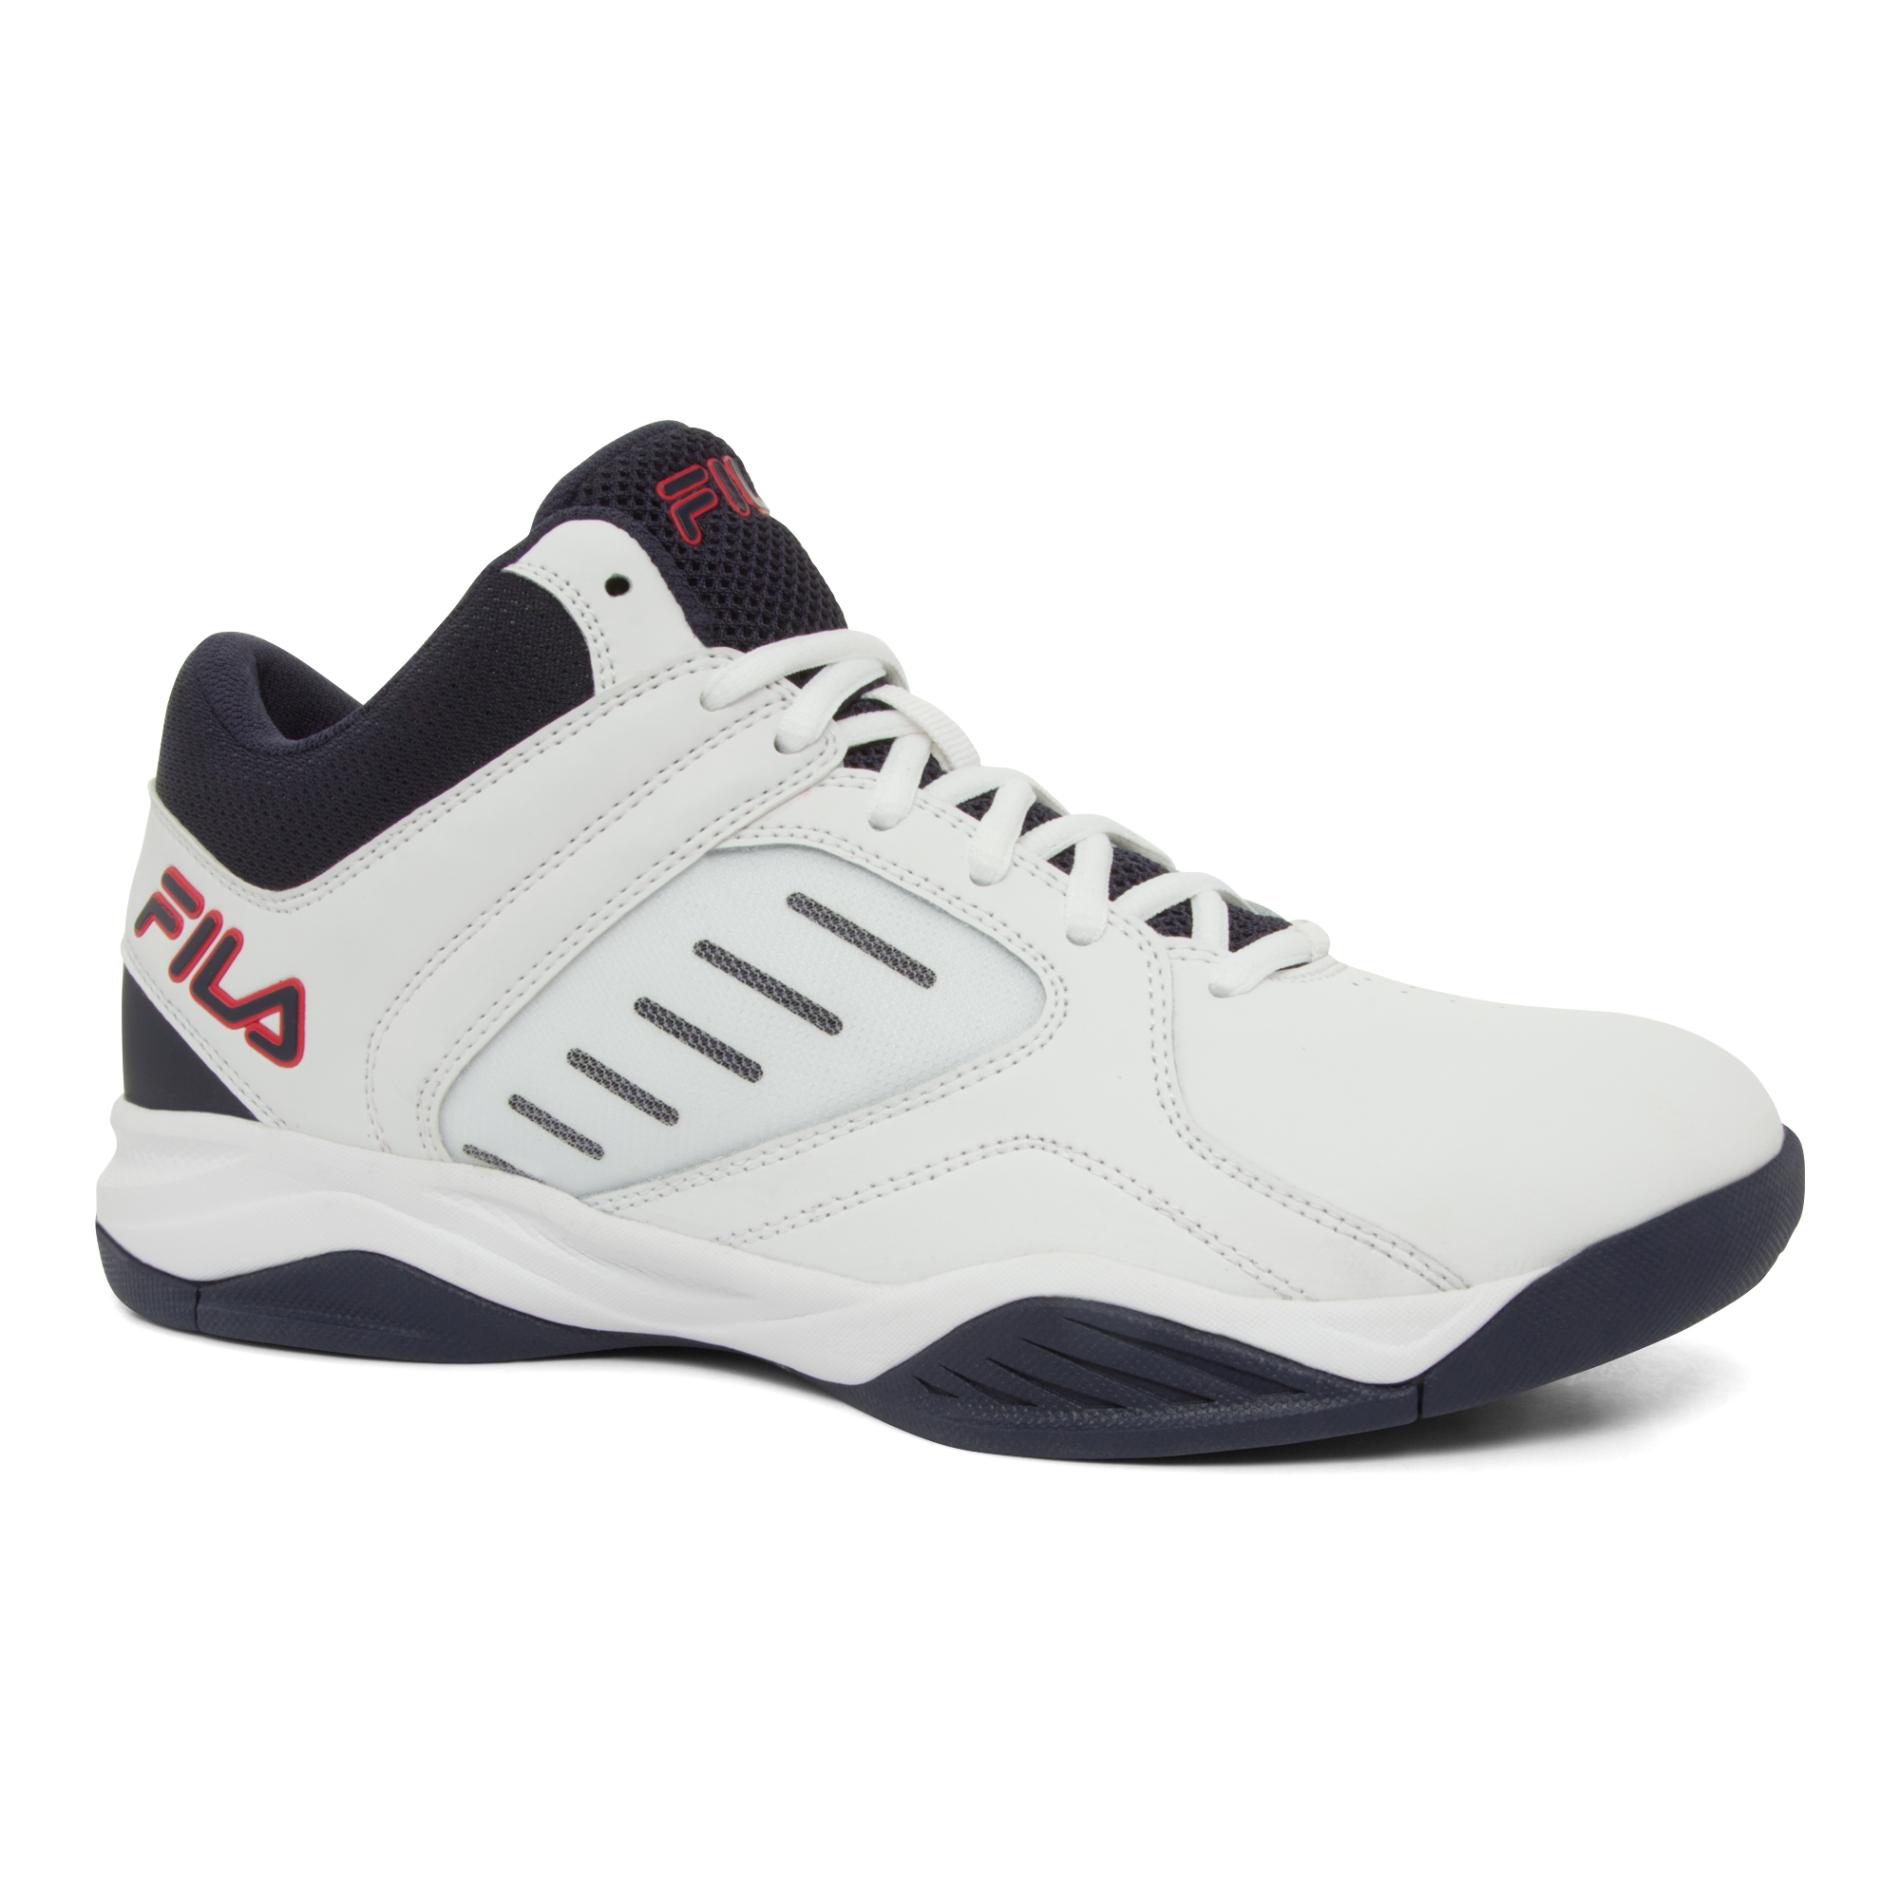 Fila Men's Bank Athletic Shoe - White/Navy